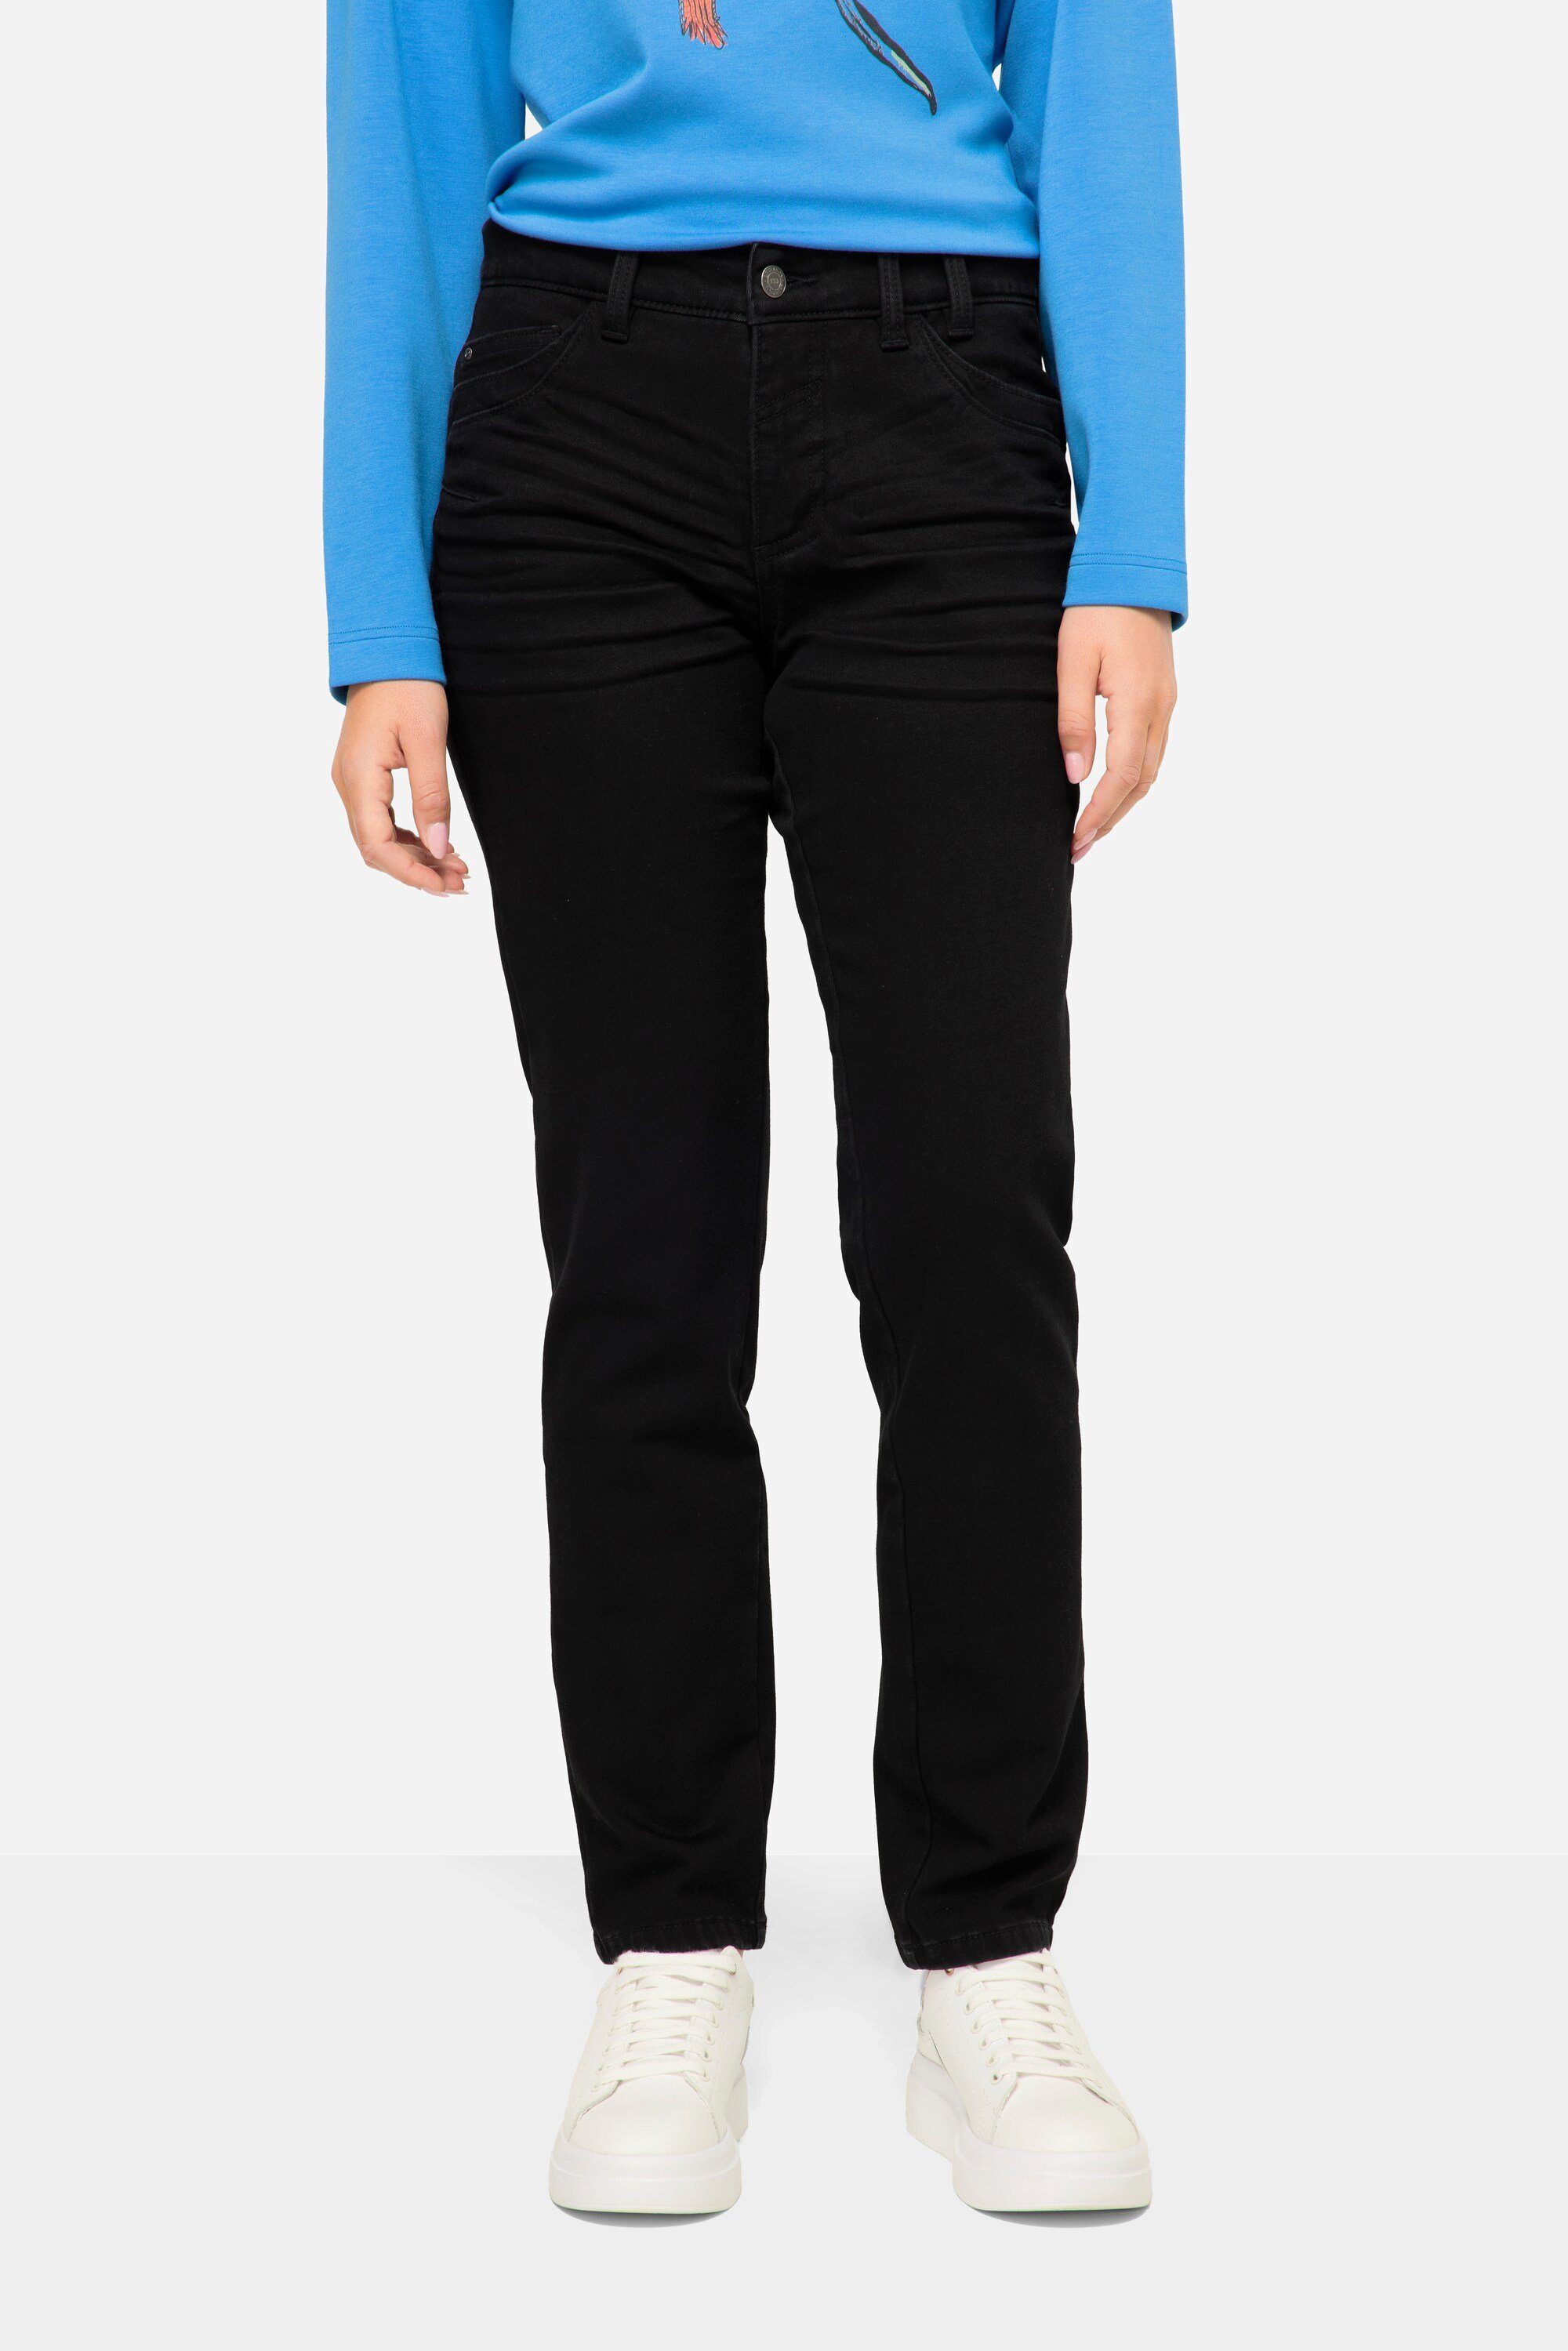 Laurasøn 5-Pocket-Jeans schwarz Fit 5-Pocket Straight Winter-Jeans